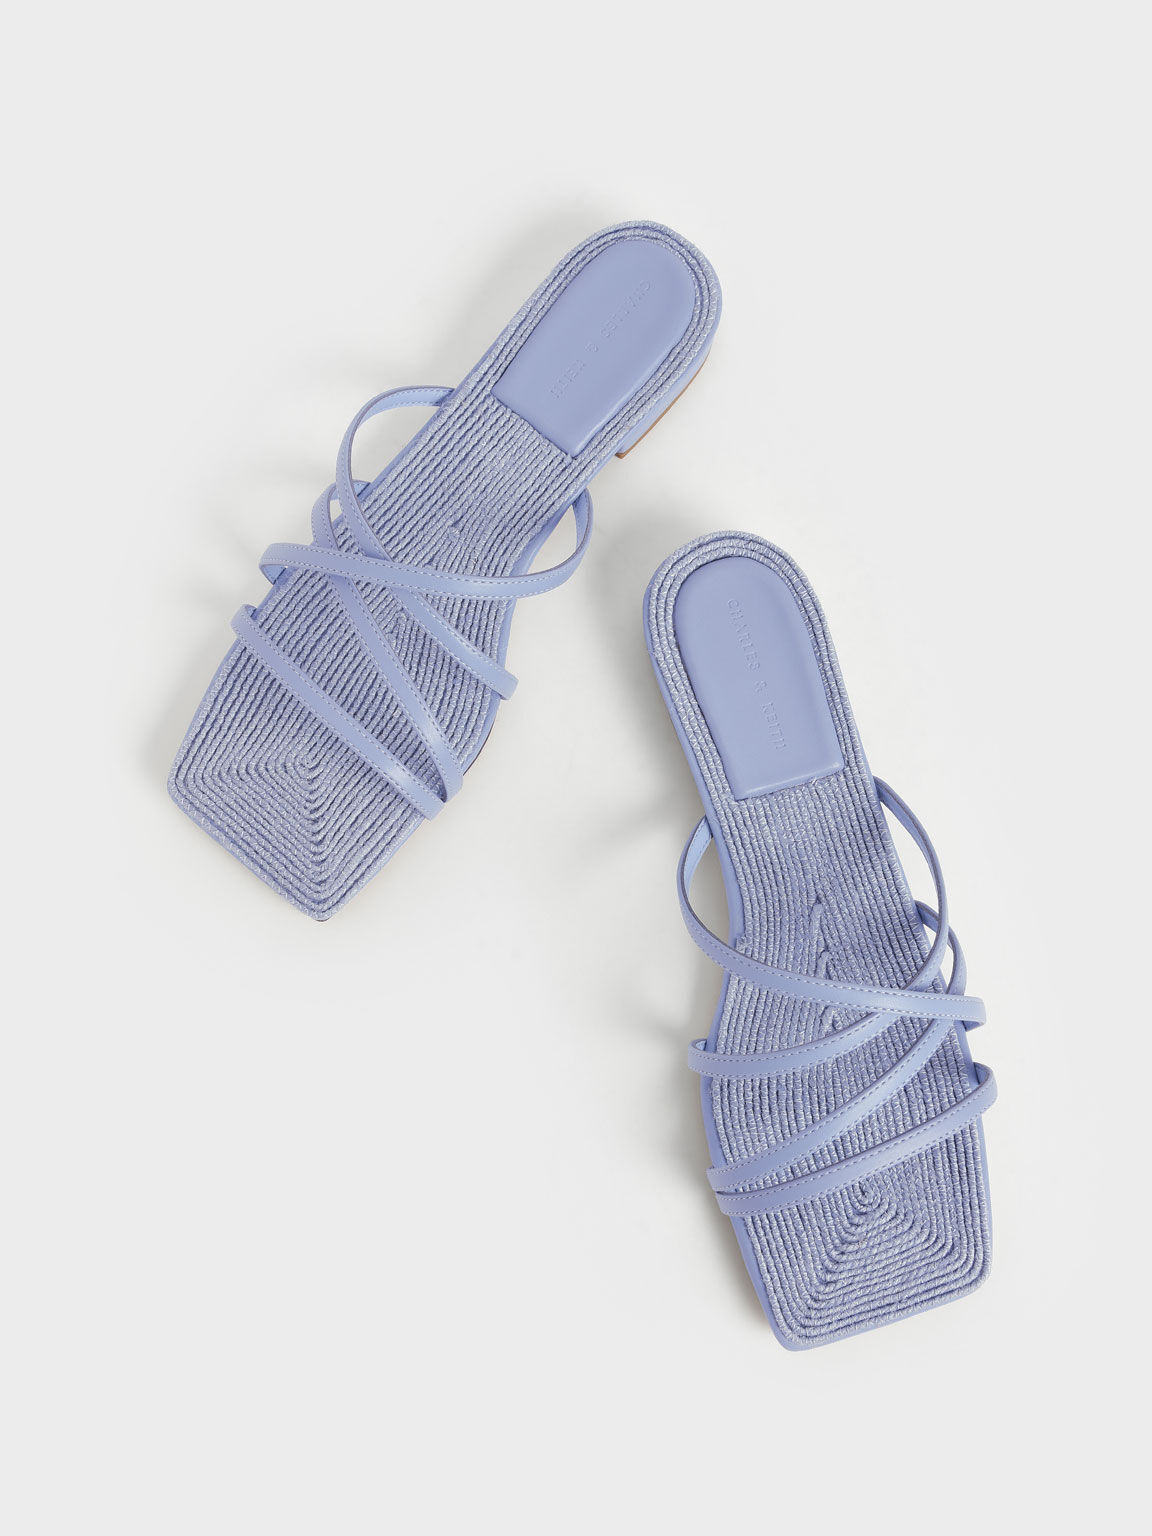 Strappy Square Toe Sandals, Blue, hi-res